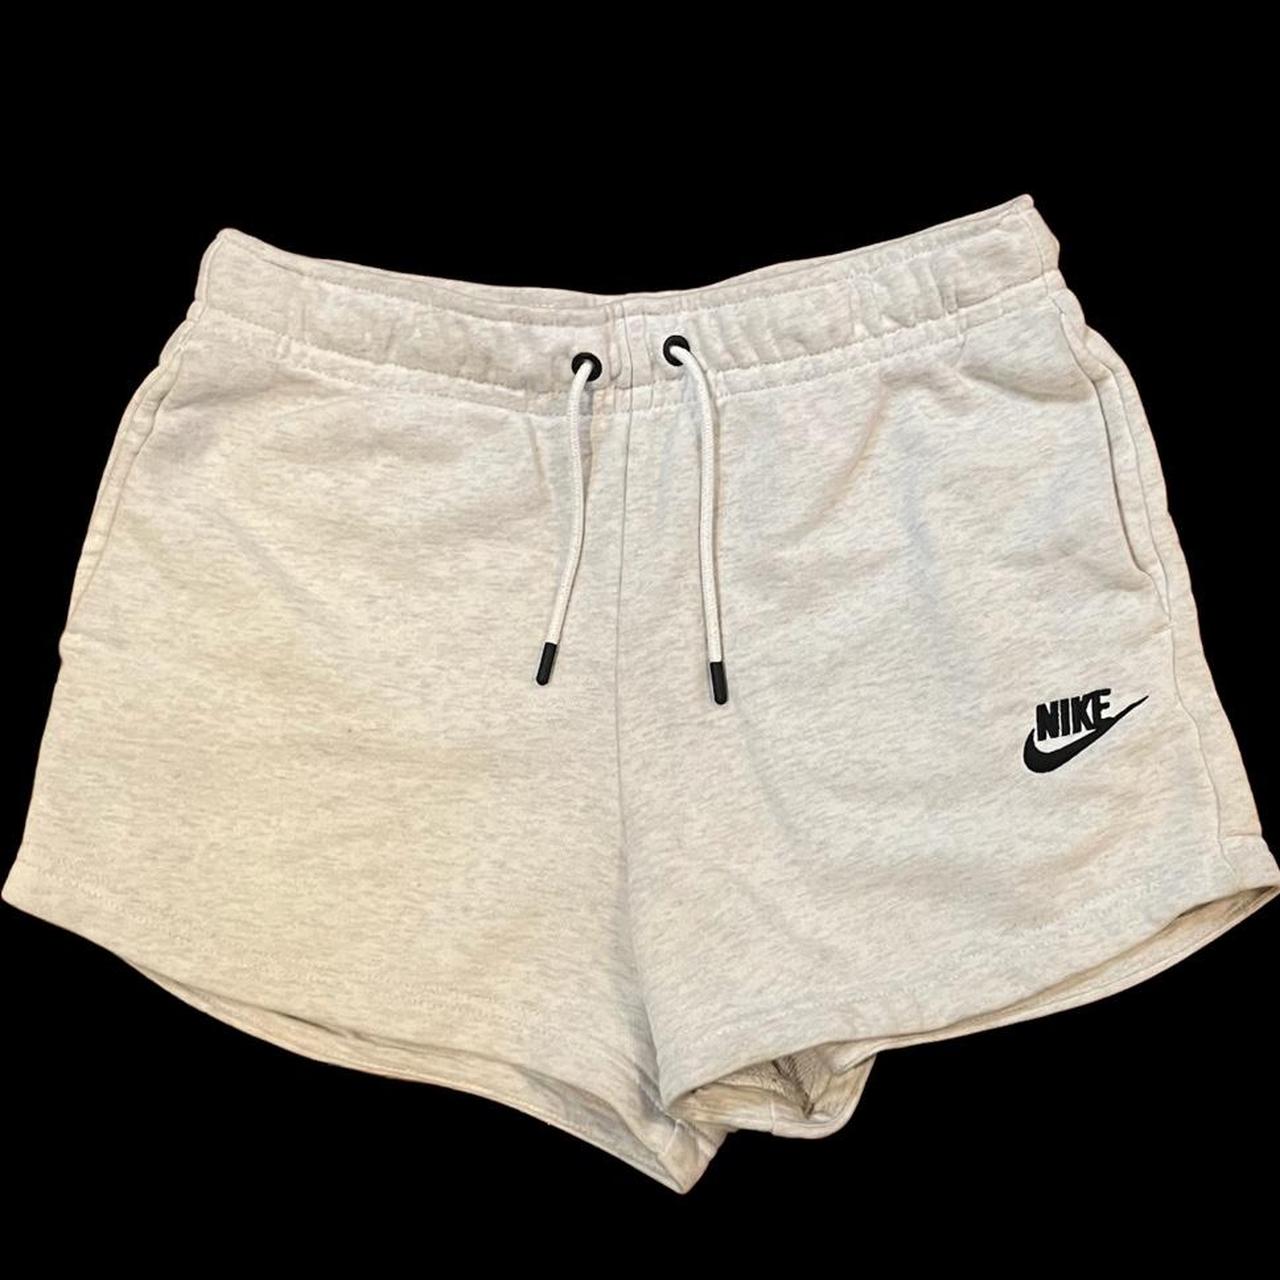 Nike Women's Grey and Black Shorts